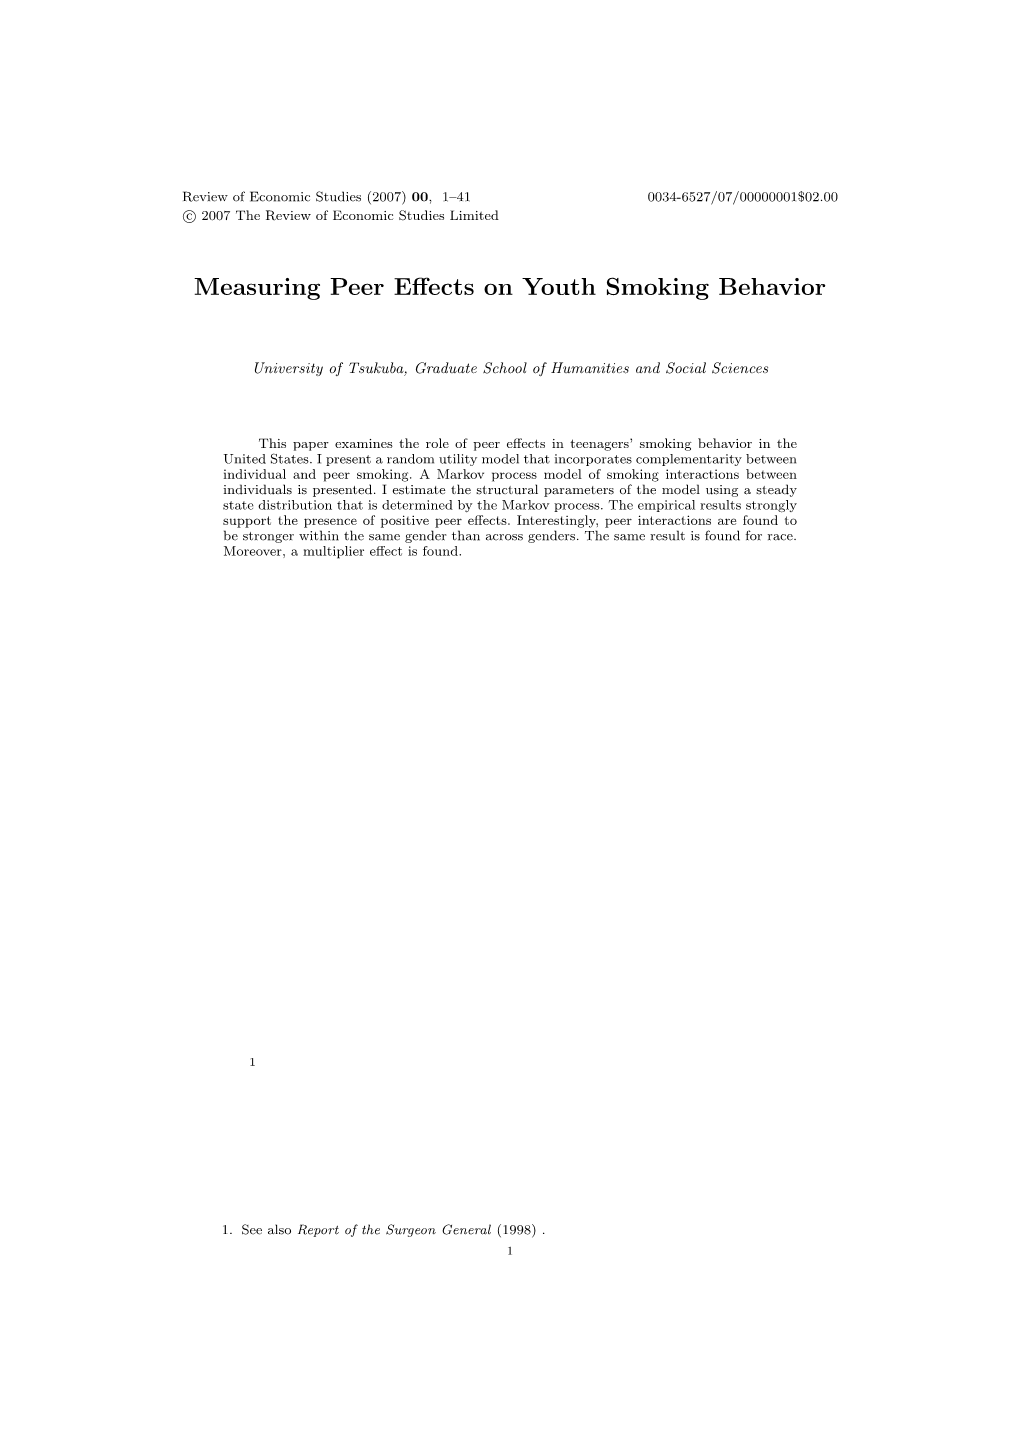 Measuring Peer Effects on Youth Smoking Behavior